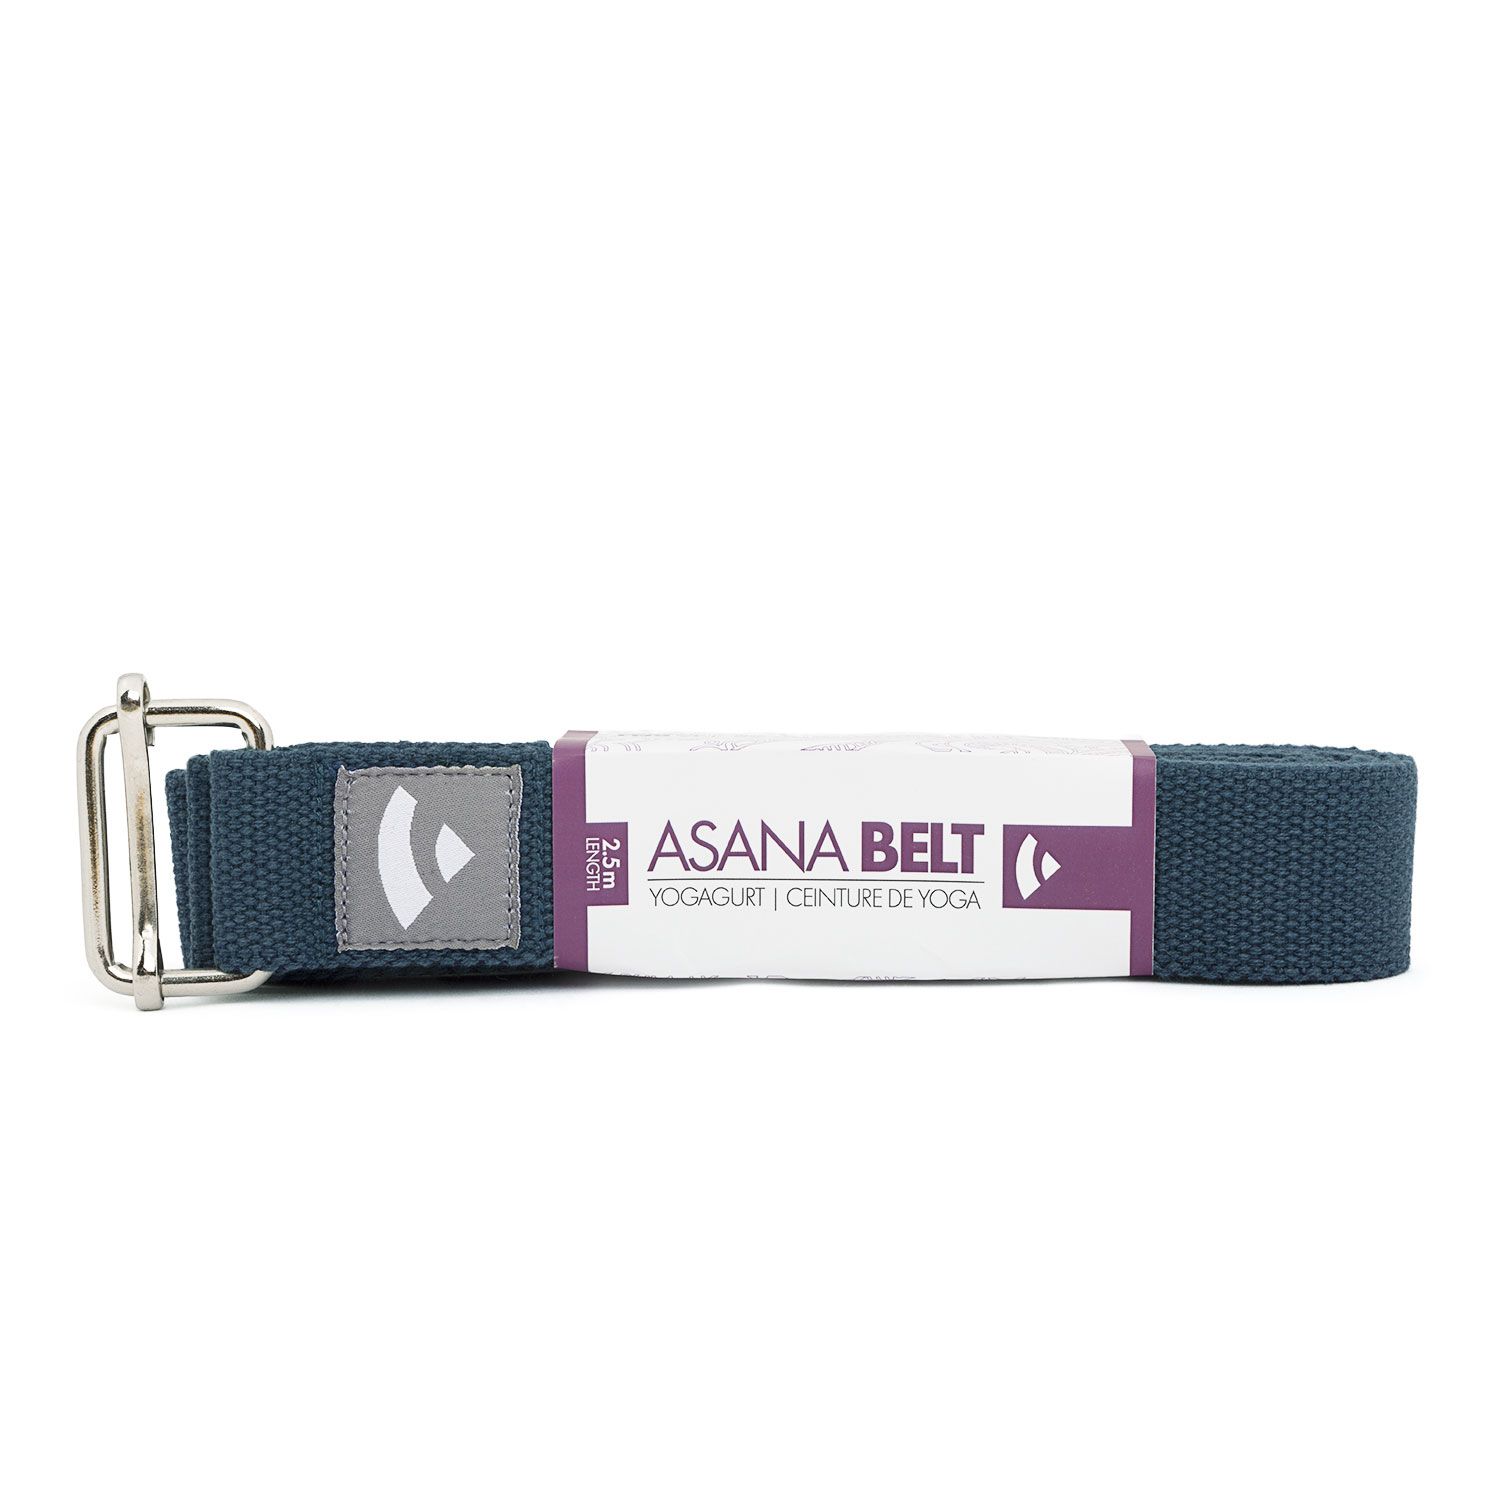 Yogagurt Asana Belt, Schiebeschnalle Baumwolle marineblau 910-NB